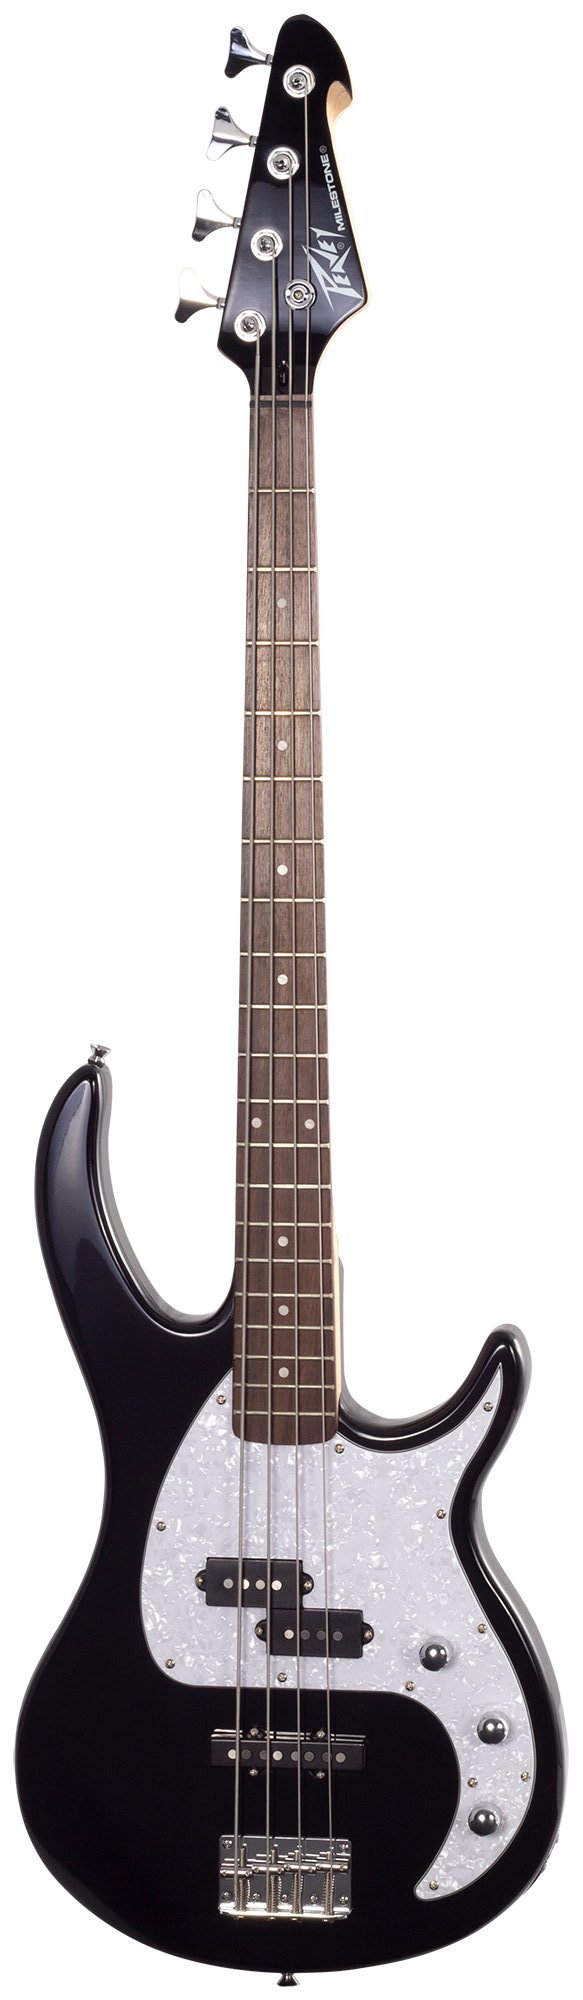 Peavey Milestone 4 Black 4-String Electric Bass Guitar with Powerplate